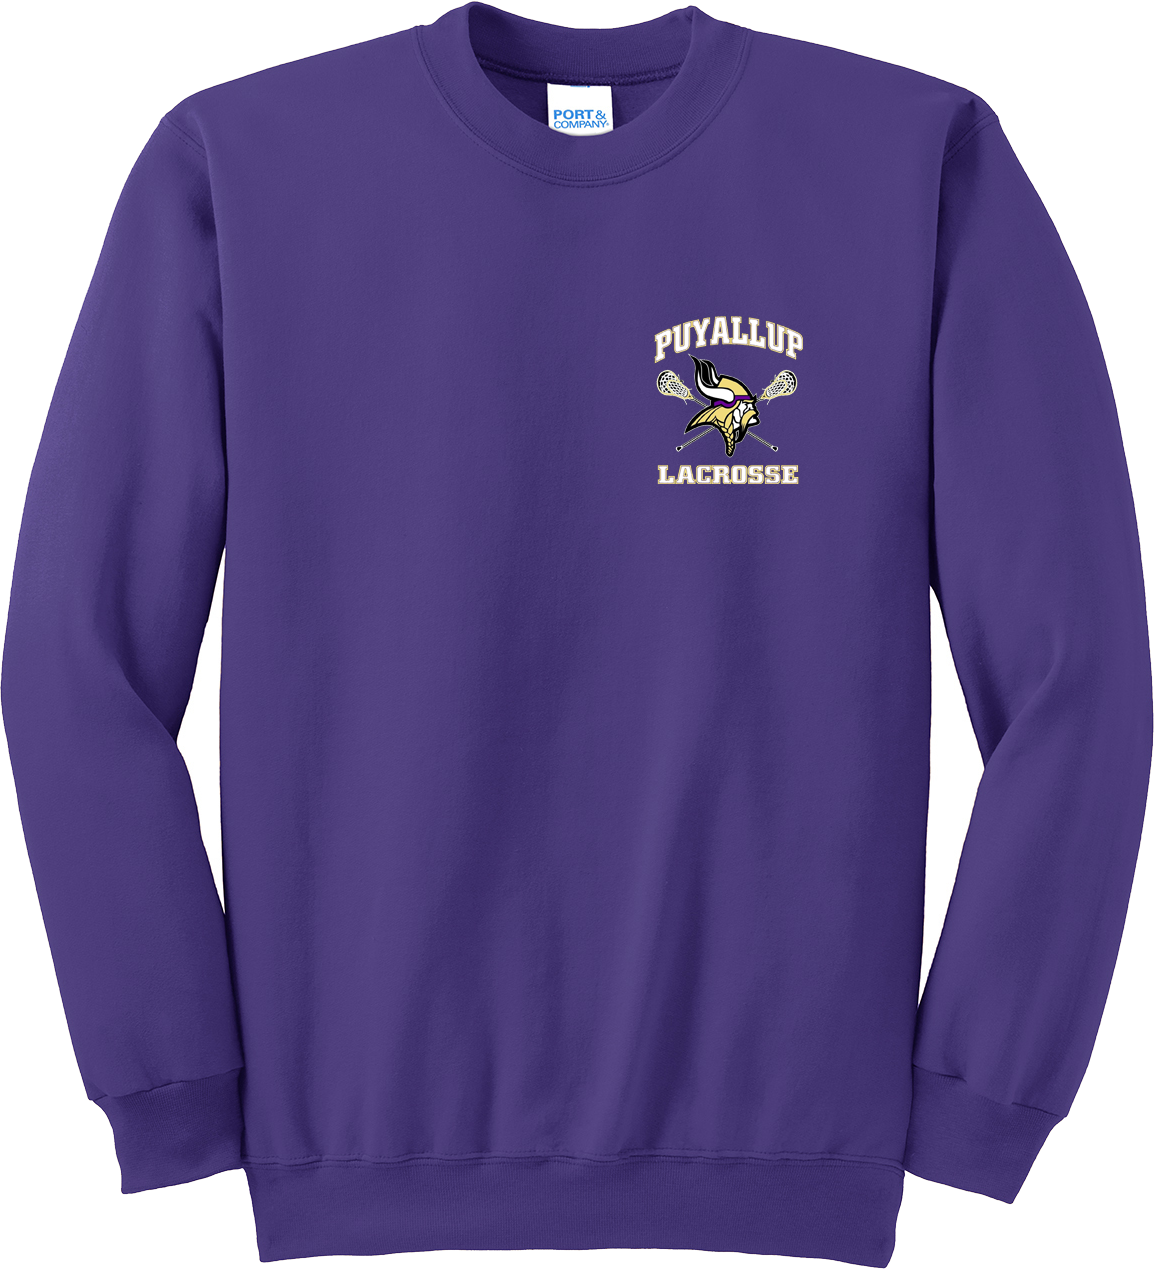 Puyallup Lacrosse Purple Crew Neck Sweatshirt